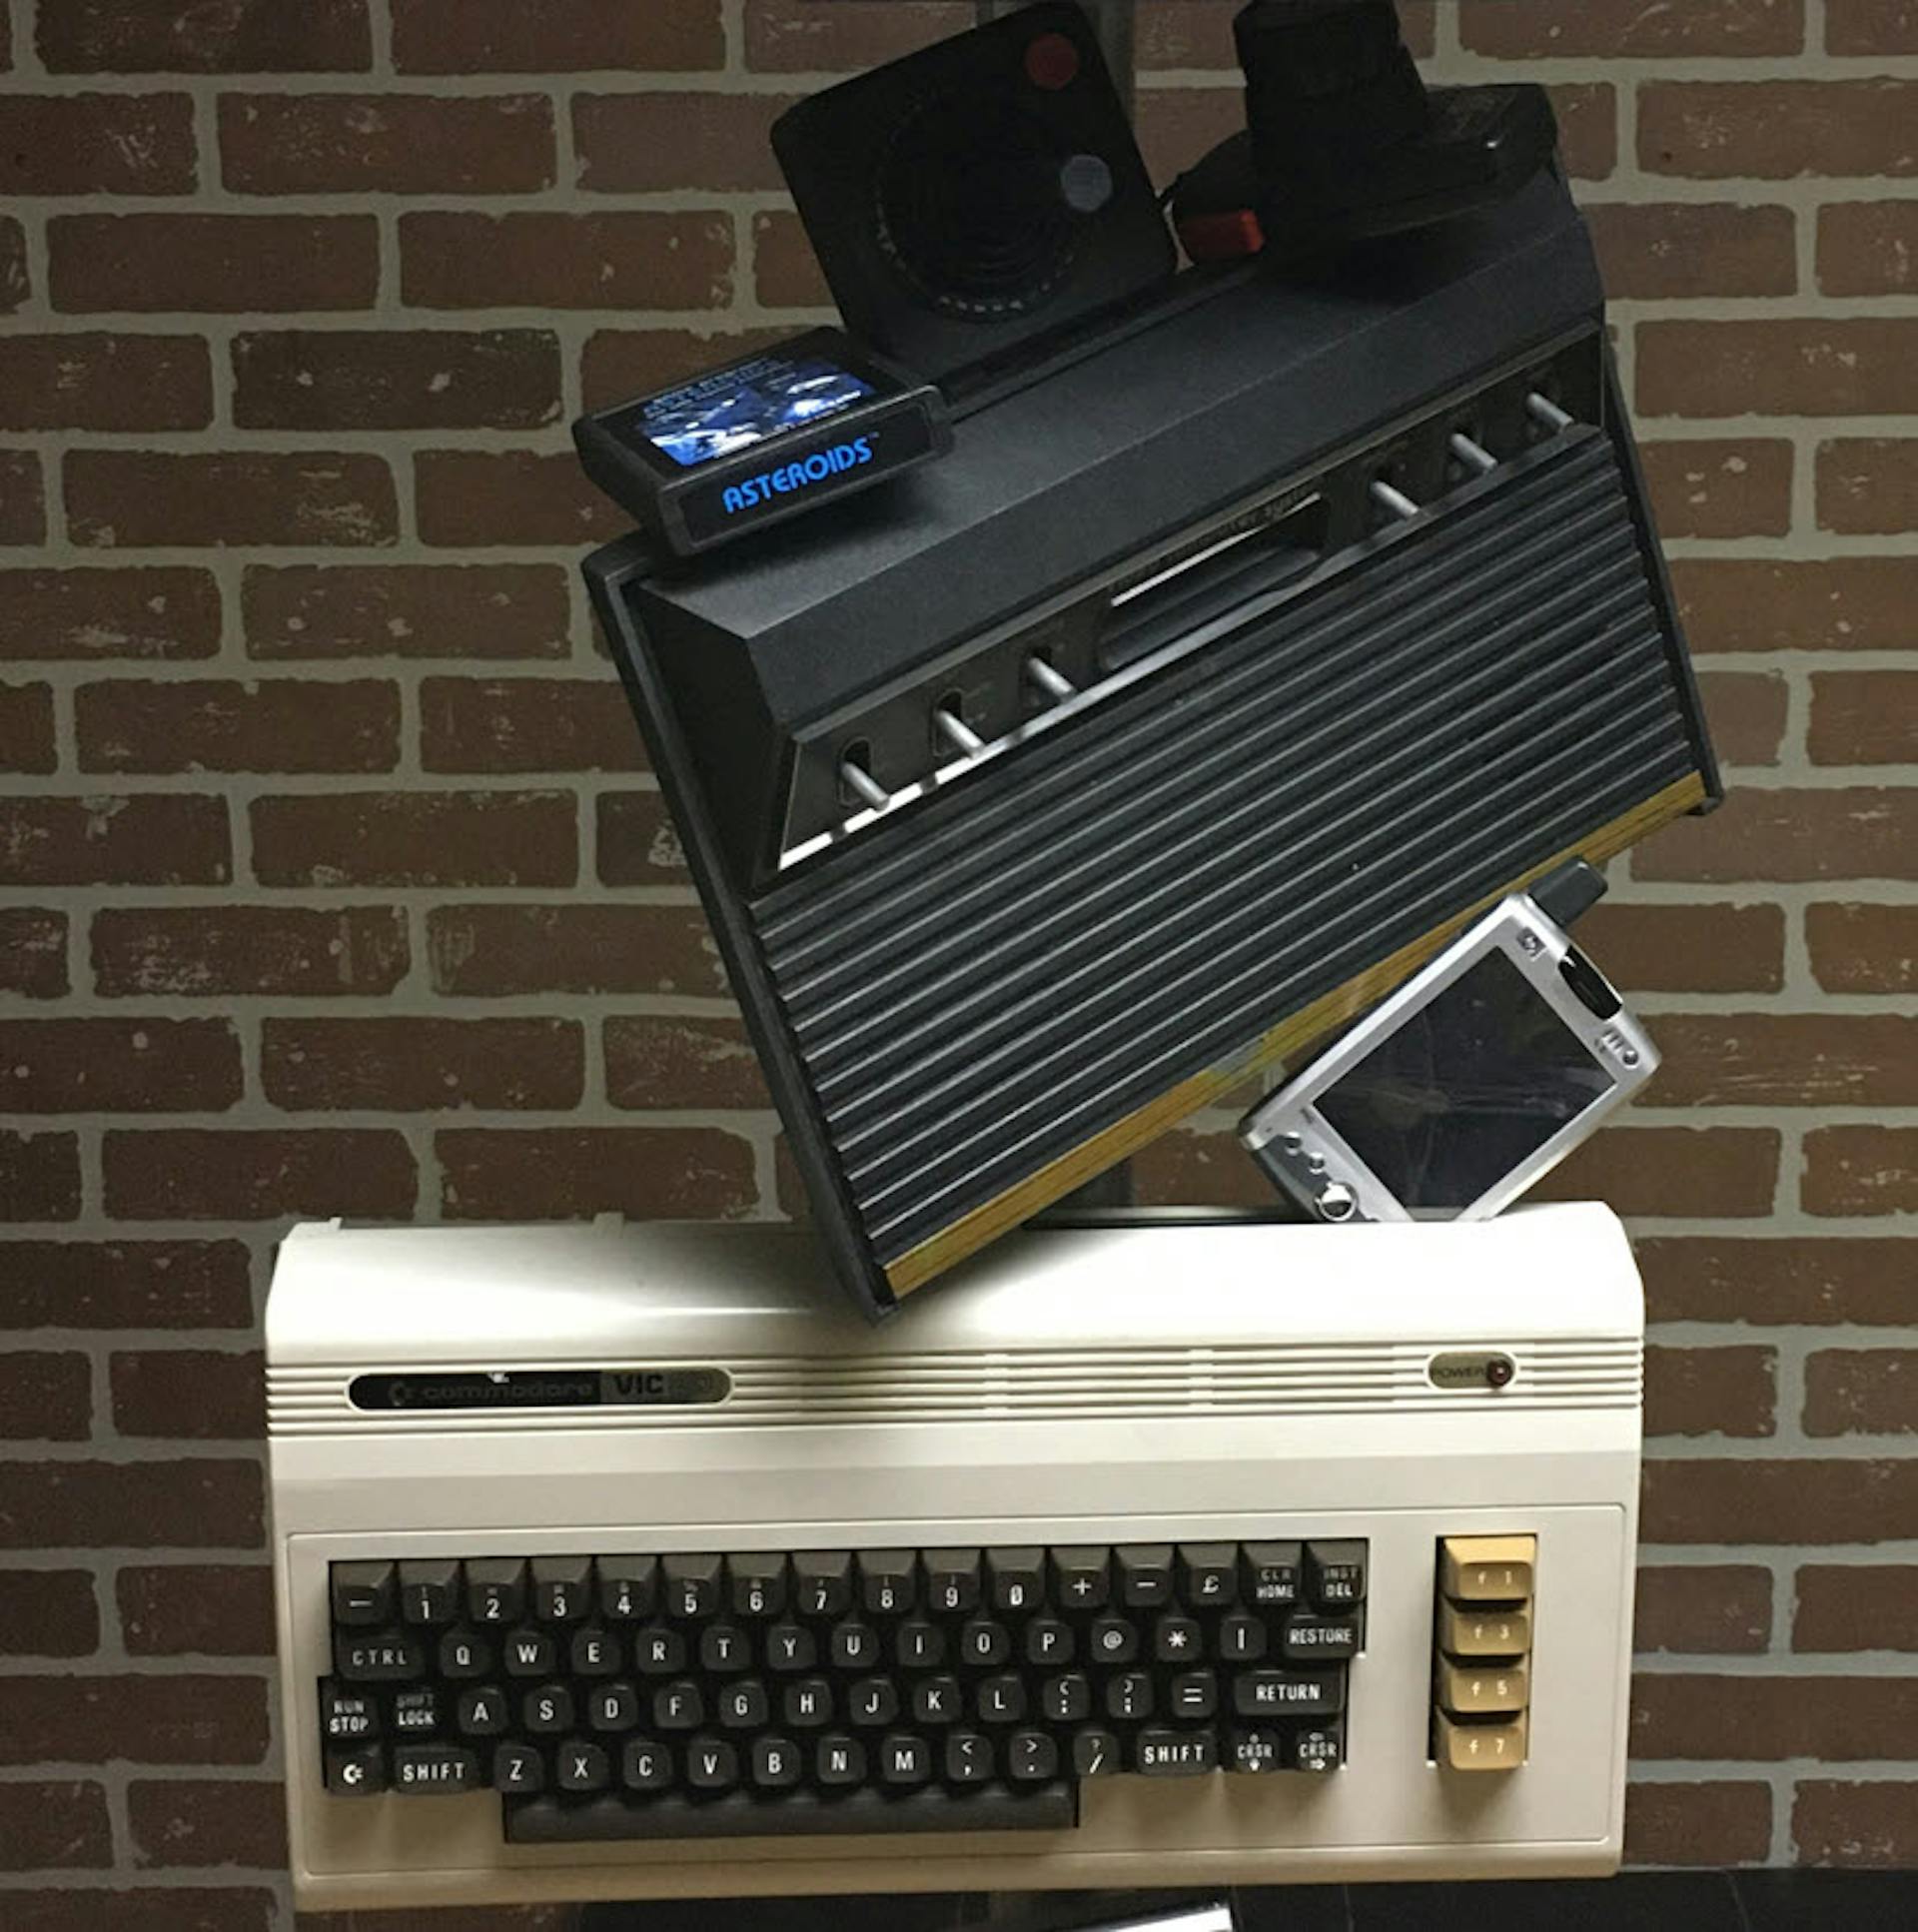 My original Atari 2600 with Asteroids game cartridge and Vic 20 (and an original HP iPAQ smartphone)